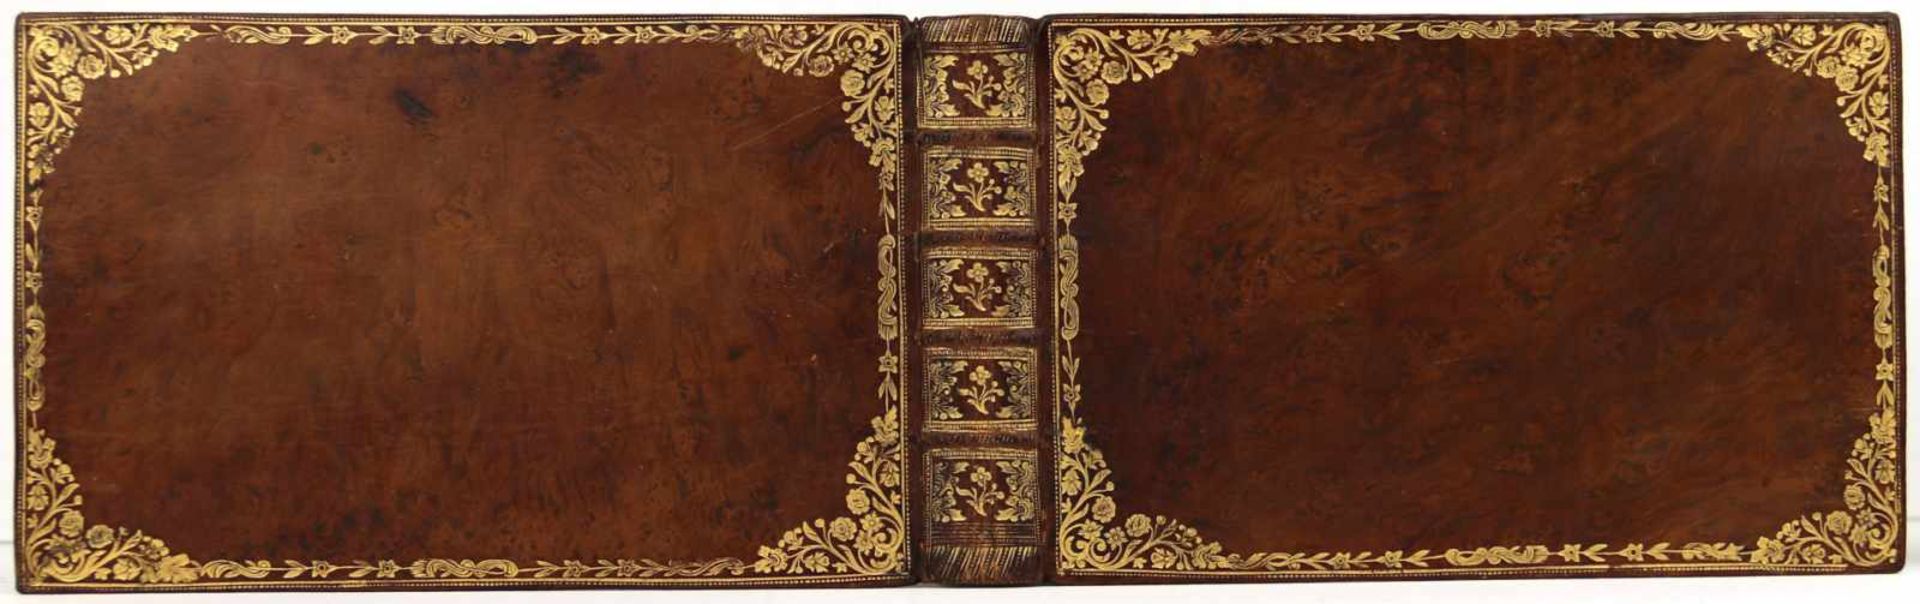 Stammbücher. - Forkel, Johann Nikolaus. (1749-1818), erster Bach-Biograph, Begründer der - Bild 6 aus 8